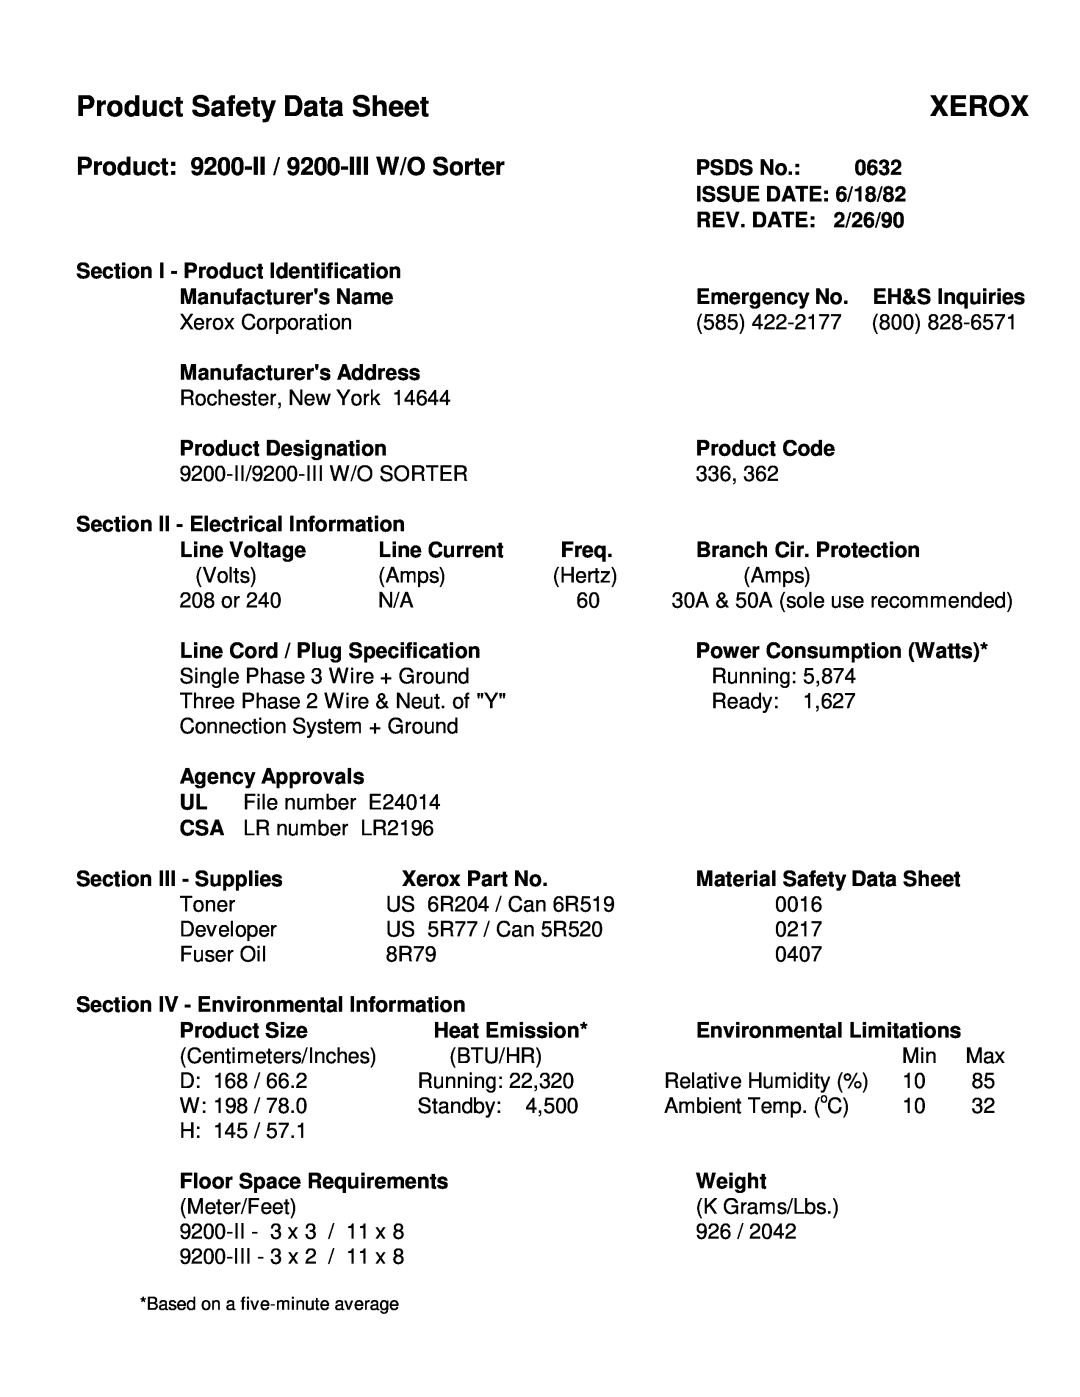 Xerox manual Product Safety Data Sheet, Xerox, Product 9200-II / 9200-III W/O Sorter 